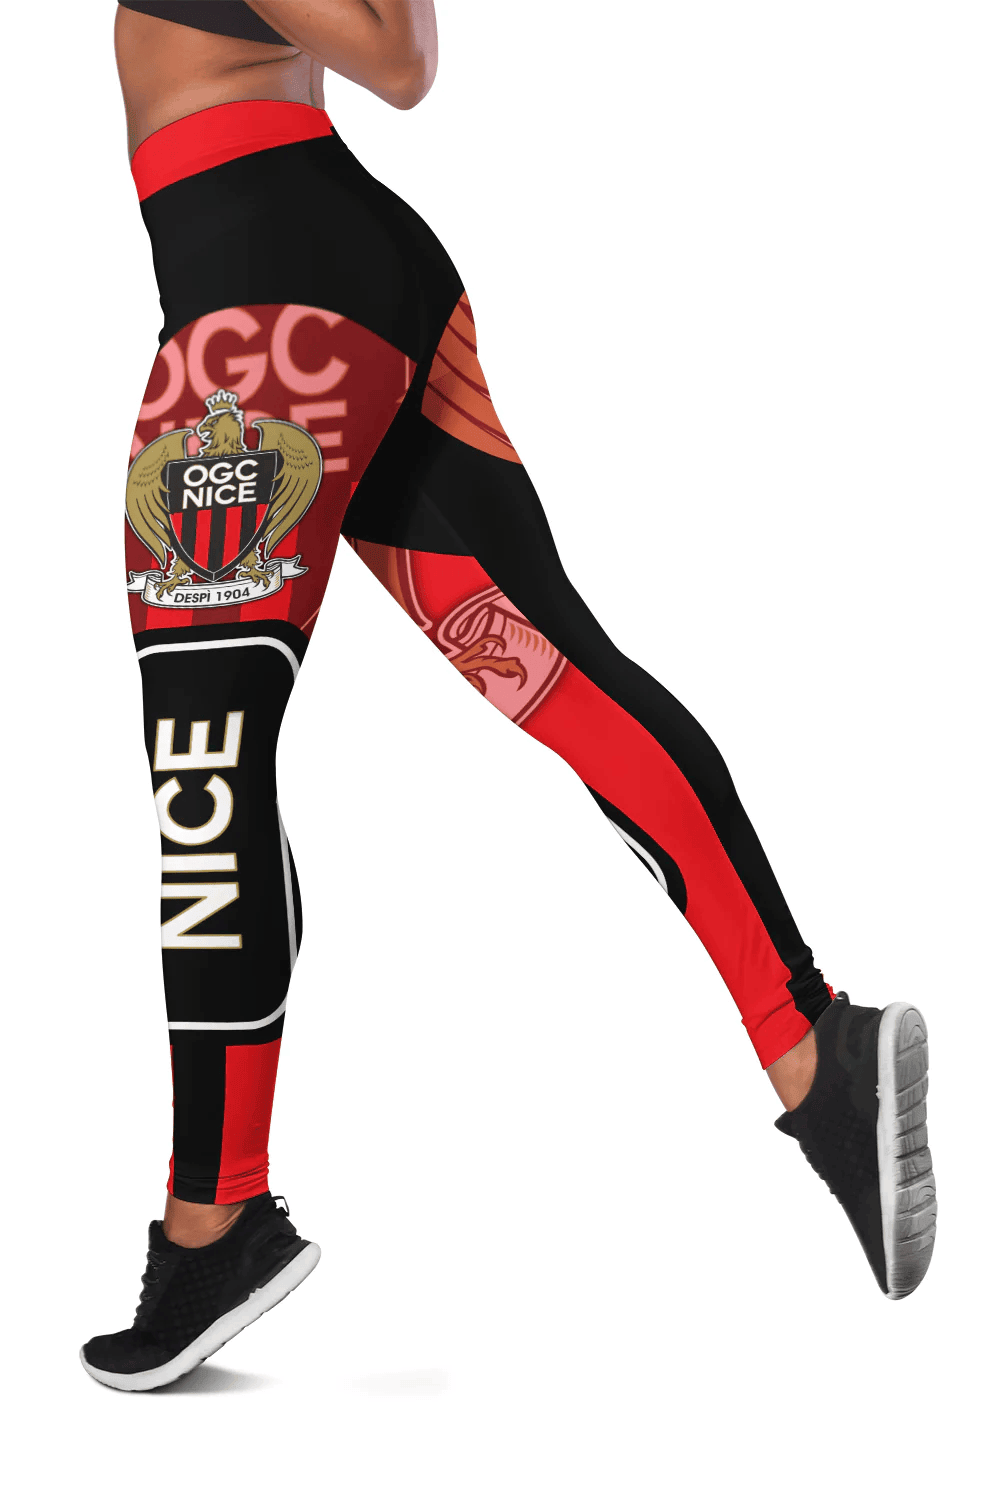 OGC Nice New Legging Style